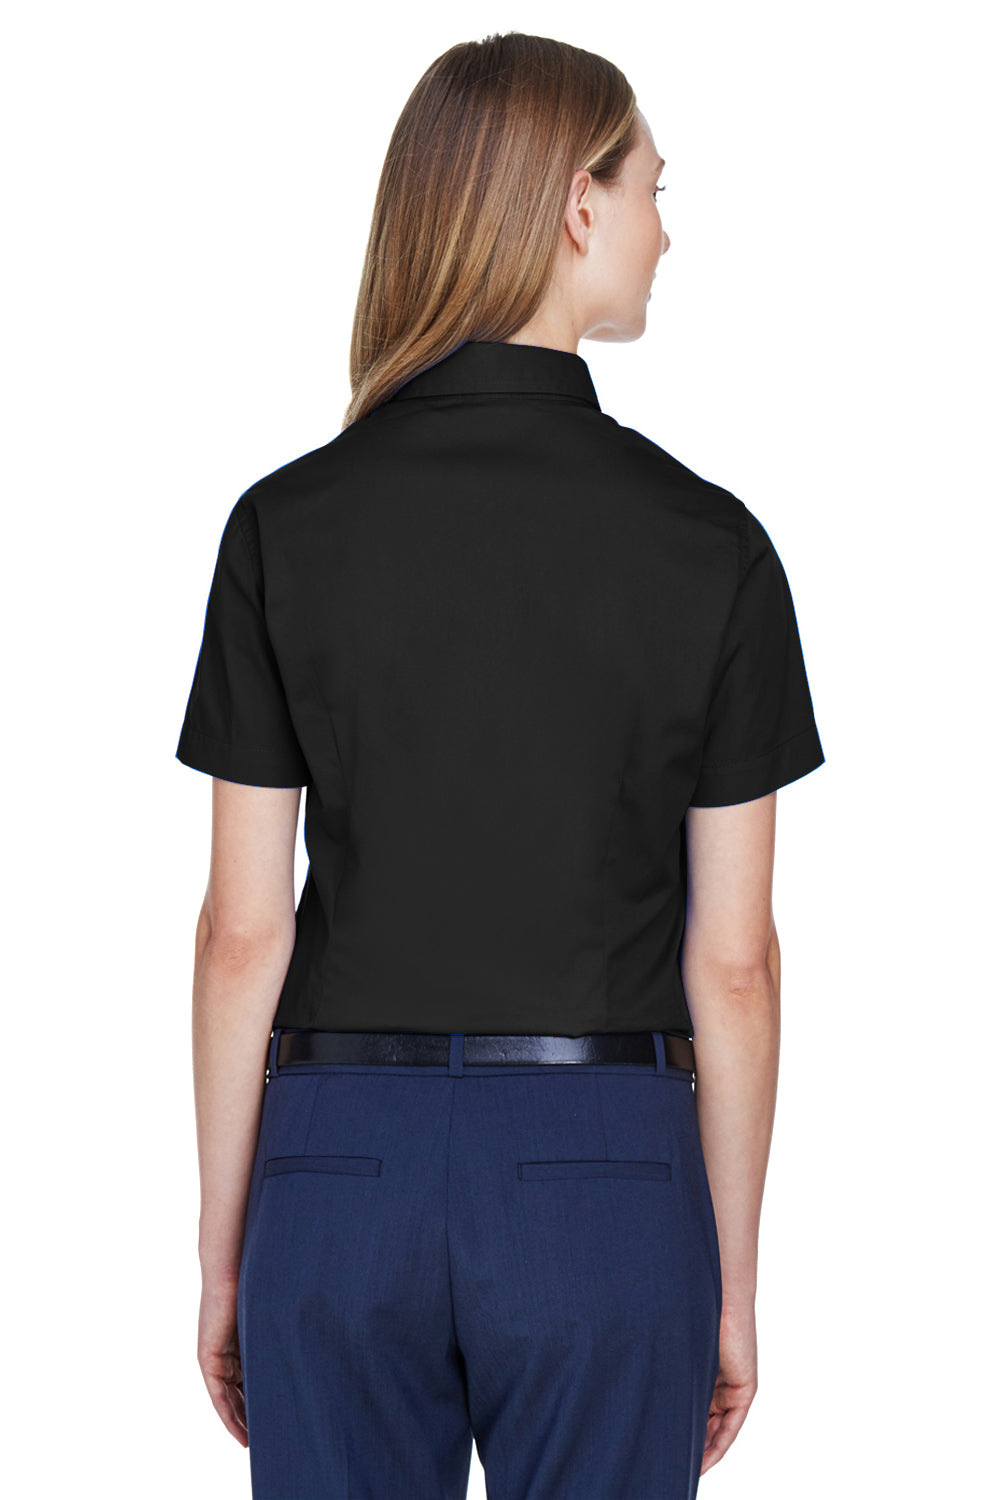 Core 365 78194 Womens Optimum Short Sleeve Button Down Shirt Black Back